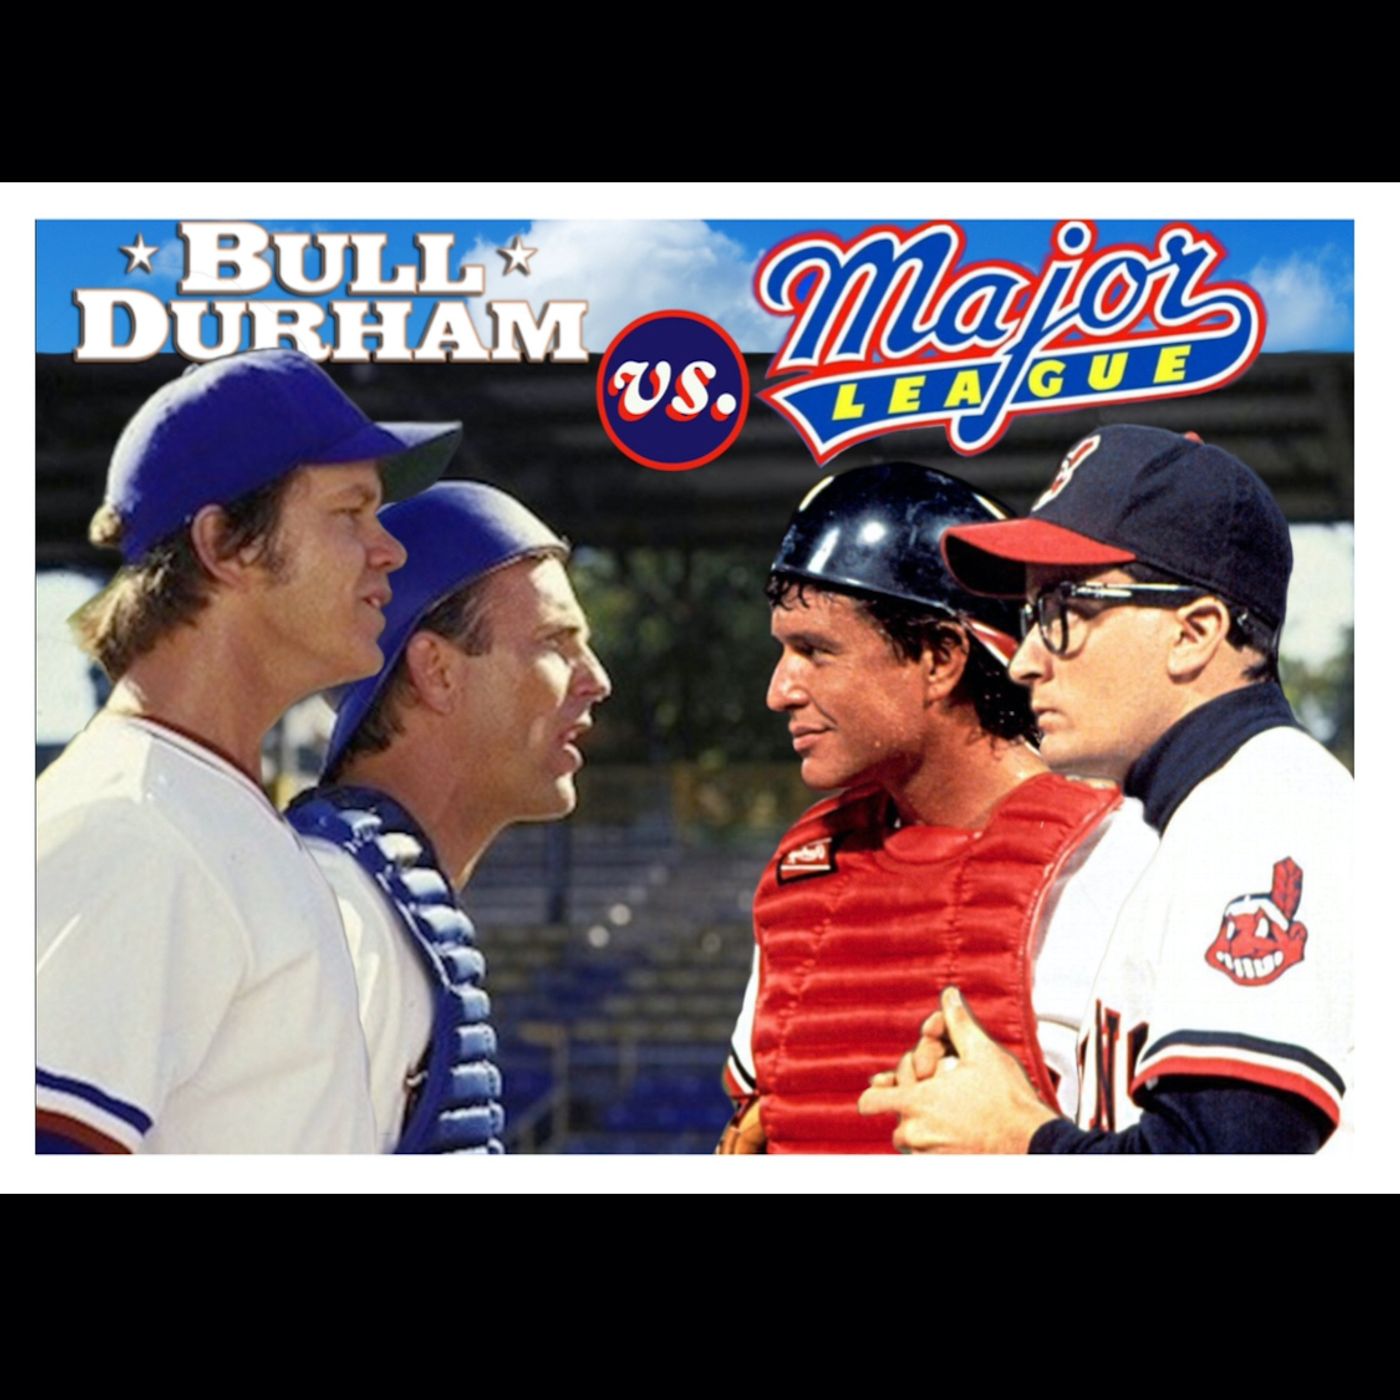 Major League (1989) -or- Bull Durham (1988) Image